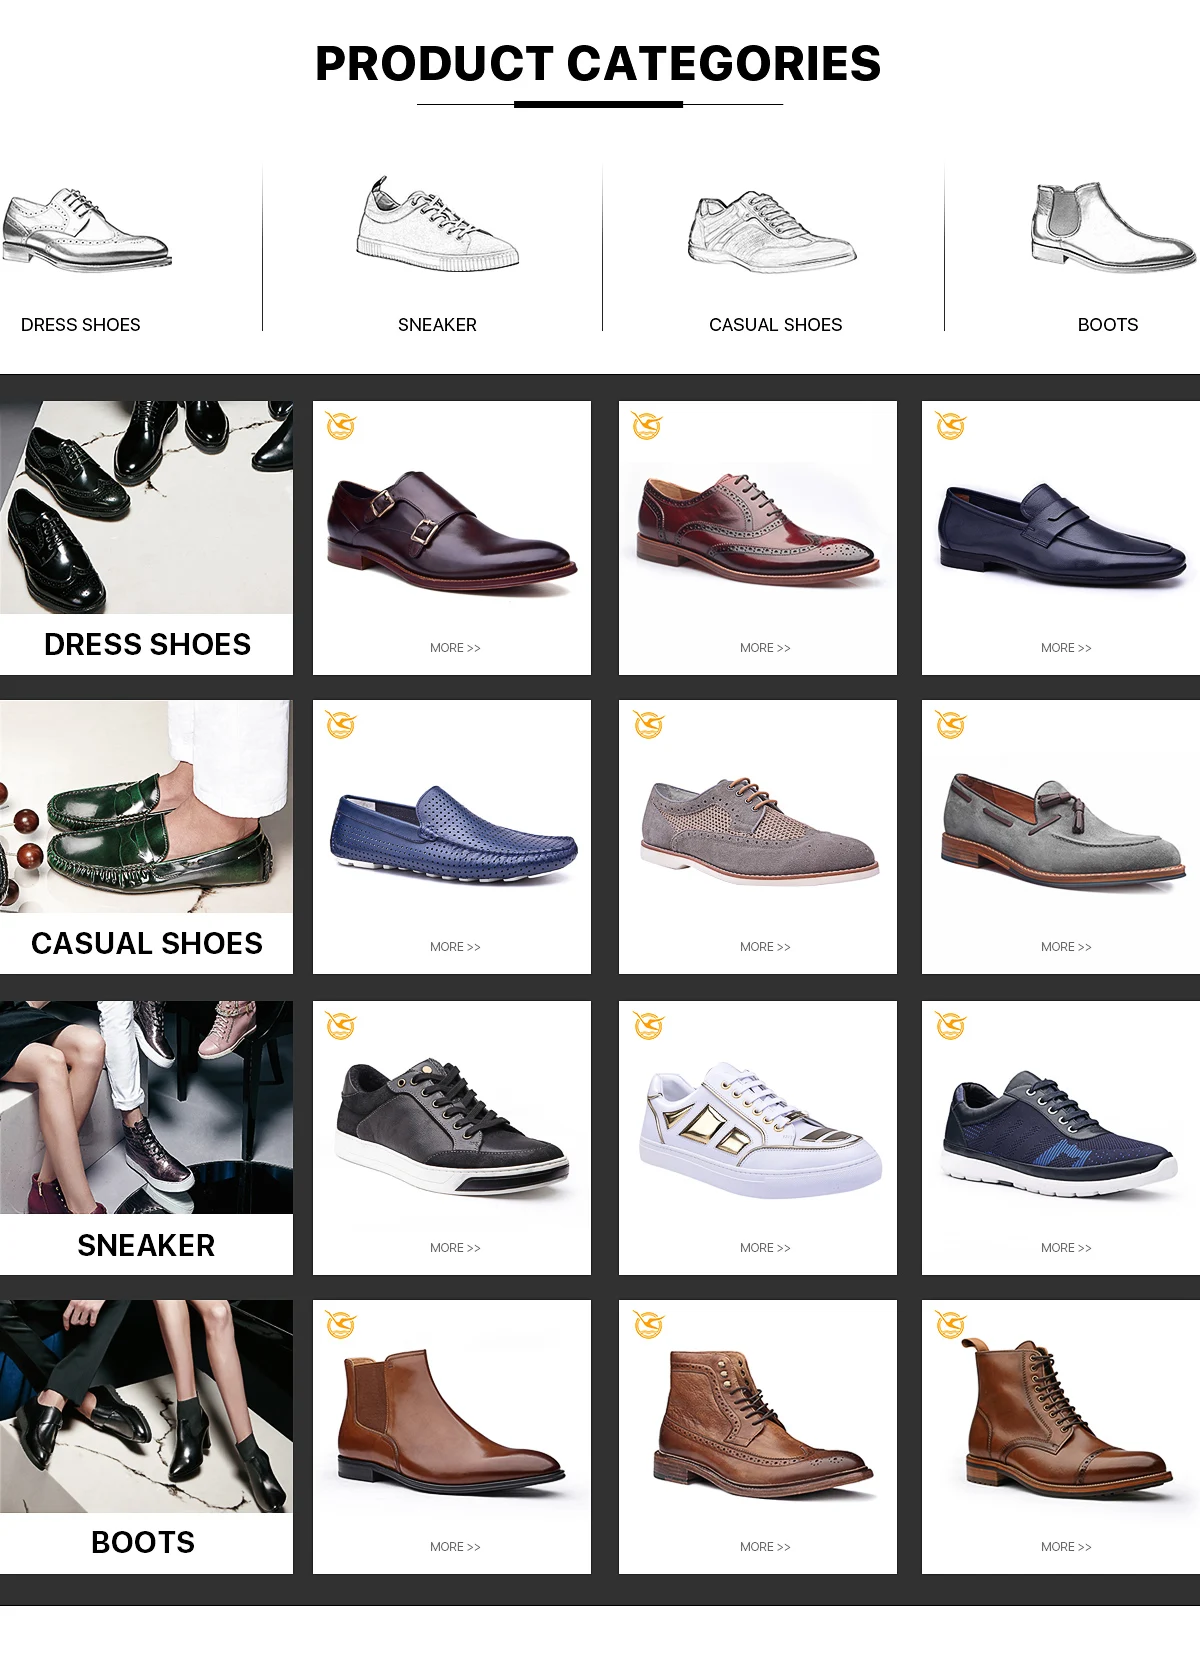 dress shoes brand ranking